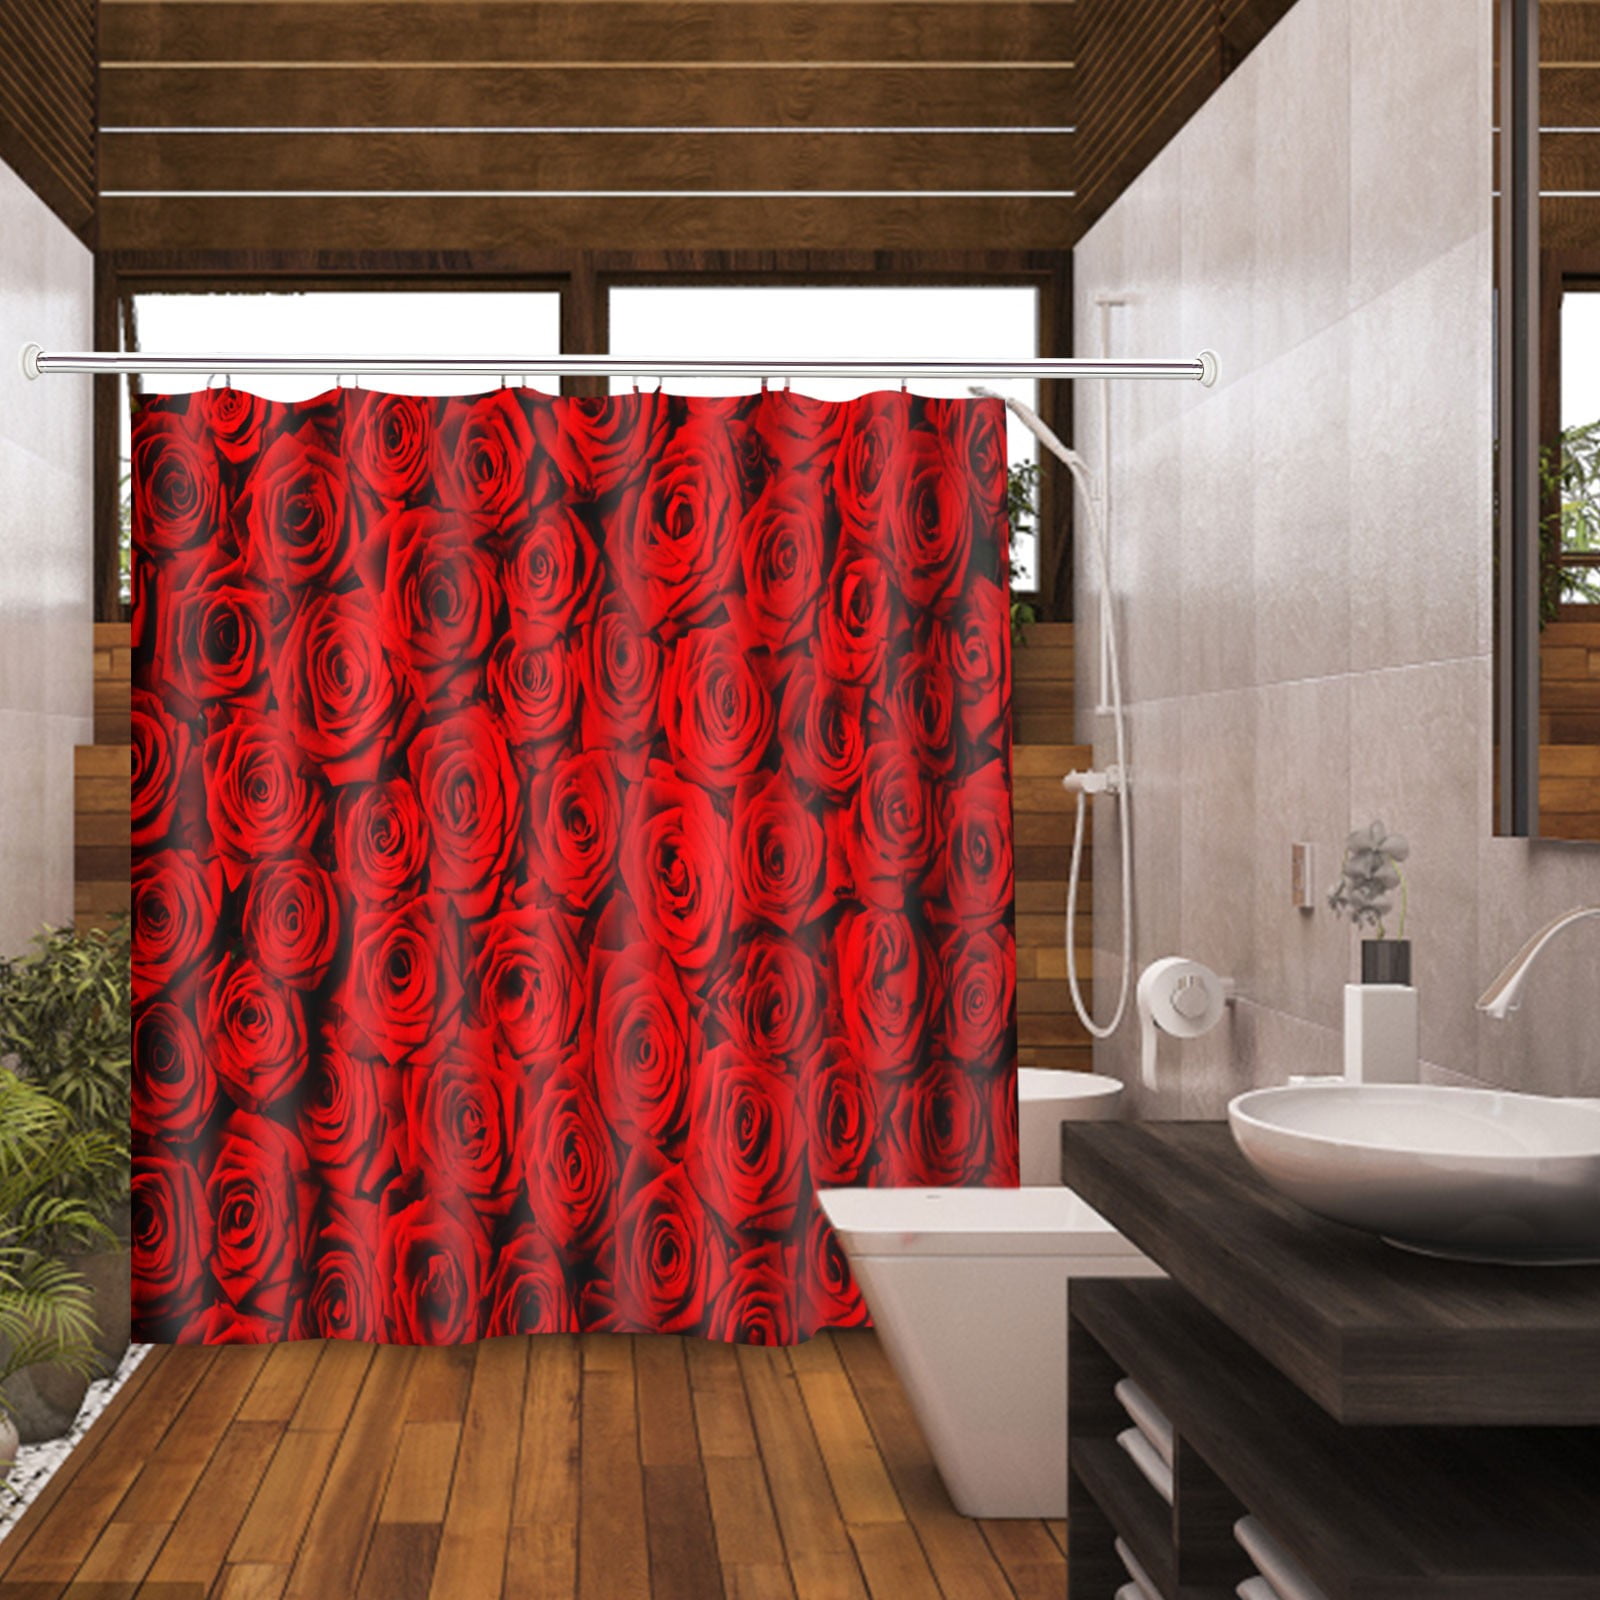 Romantic Shower Curtain Red Wine Rose Candle Printed Bath Curtain Bathroom Decor 